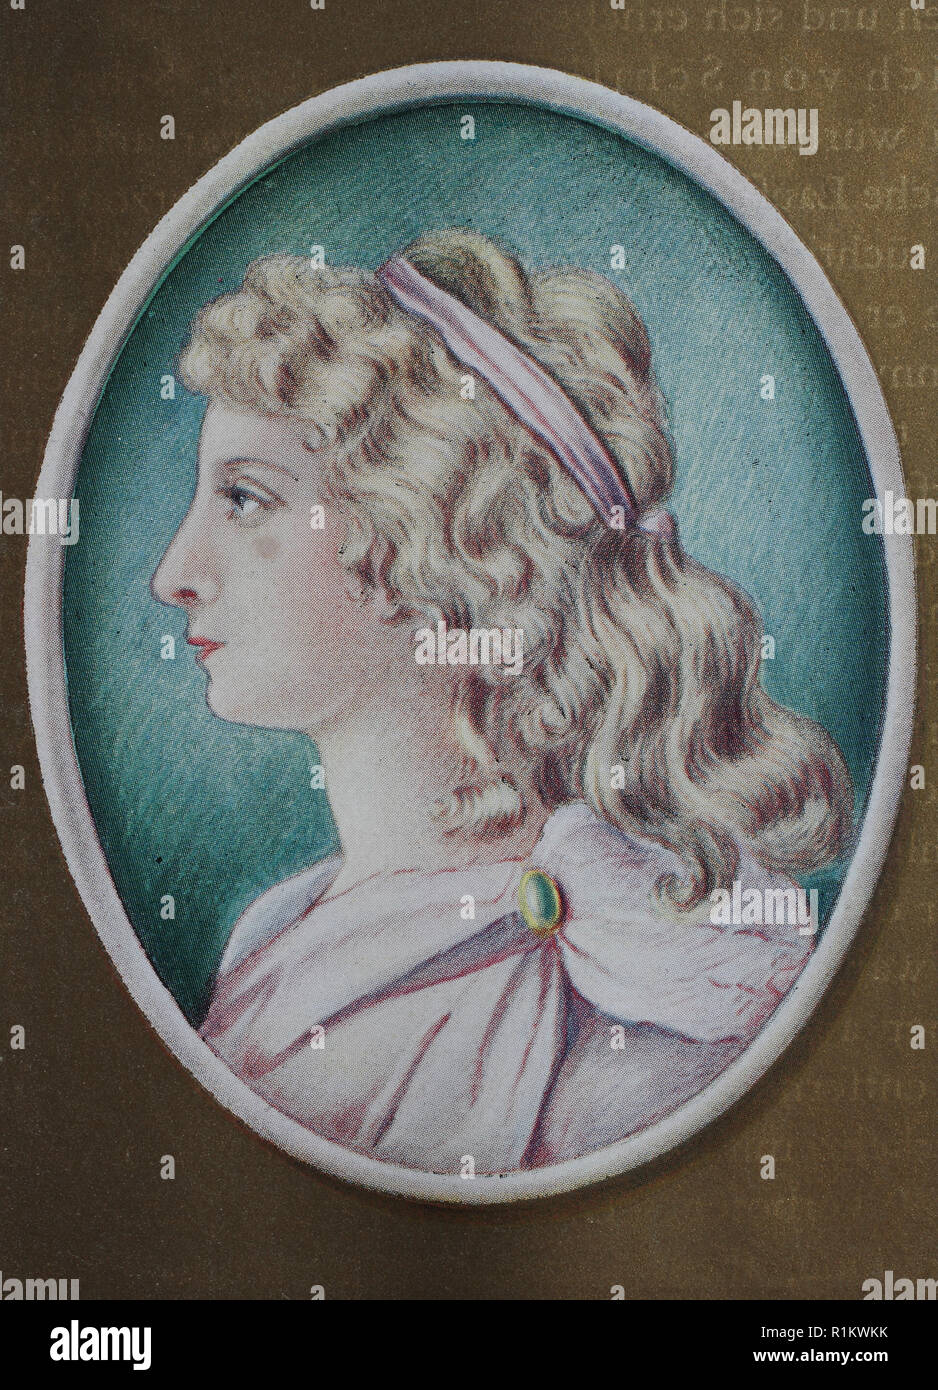 Mejor reproducción digital, Charlotte Luise Antoinette von Schiller, nacido Charlotte von Lengefeld, 1766-1826, esposa del poeta alemán Friedrich Schiller. Foto de stock